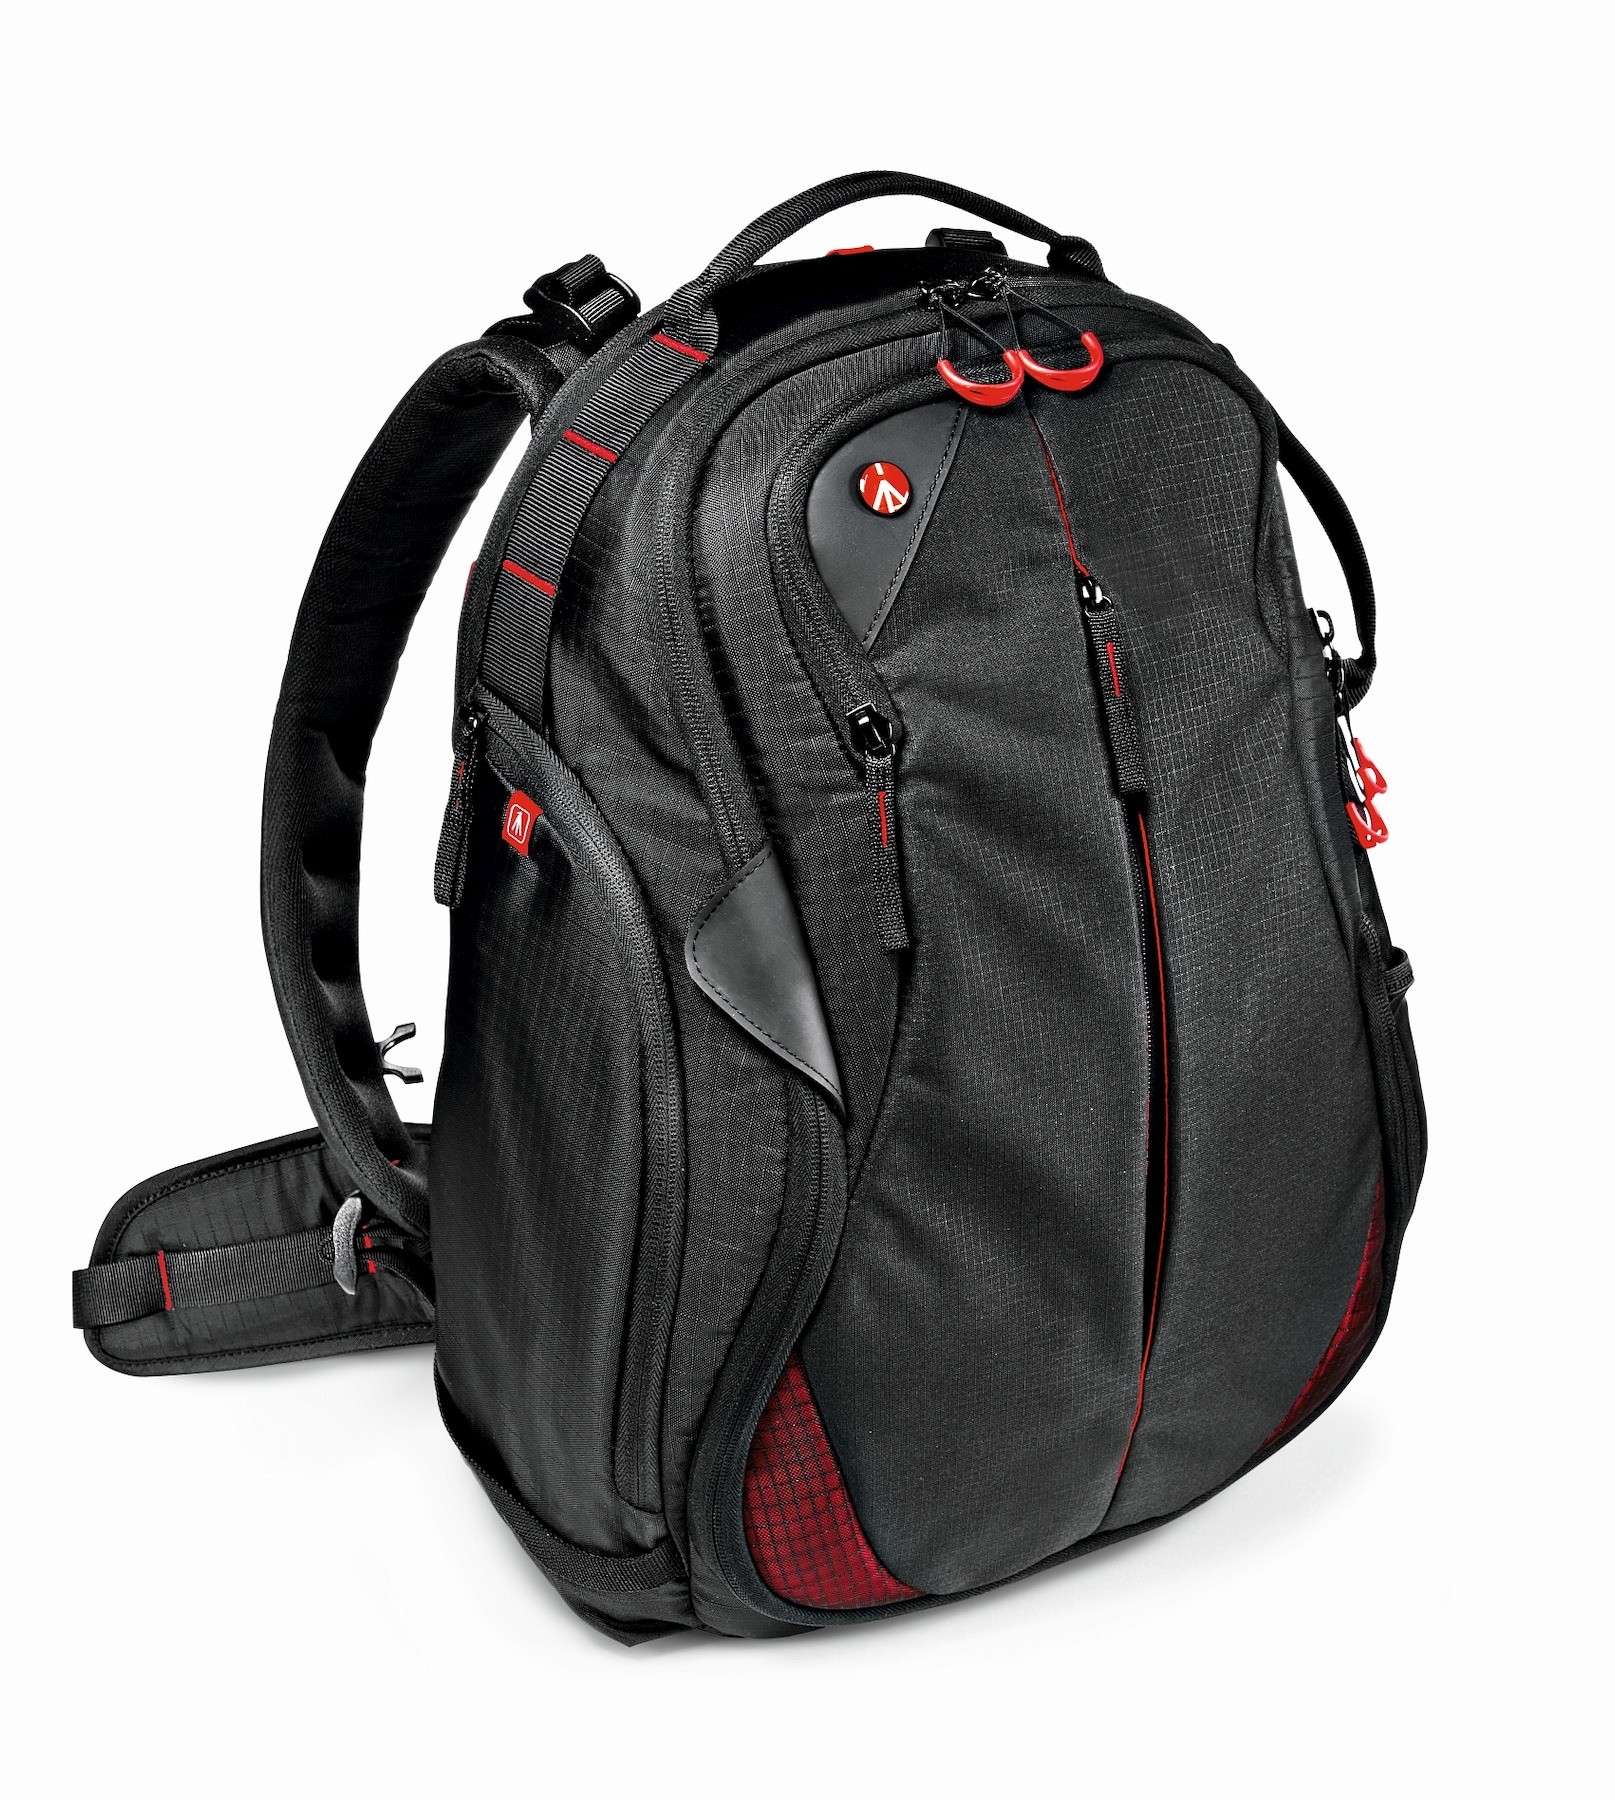 Pro Light camera backpack Bumb